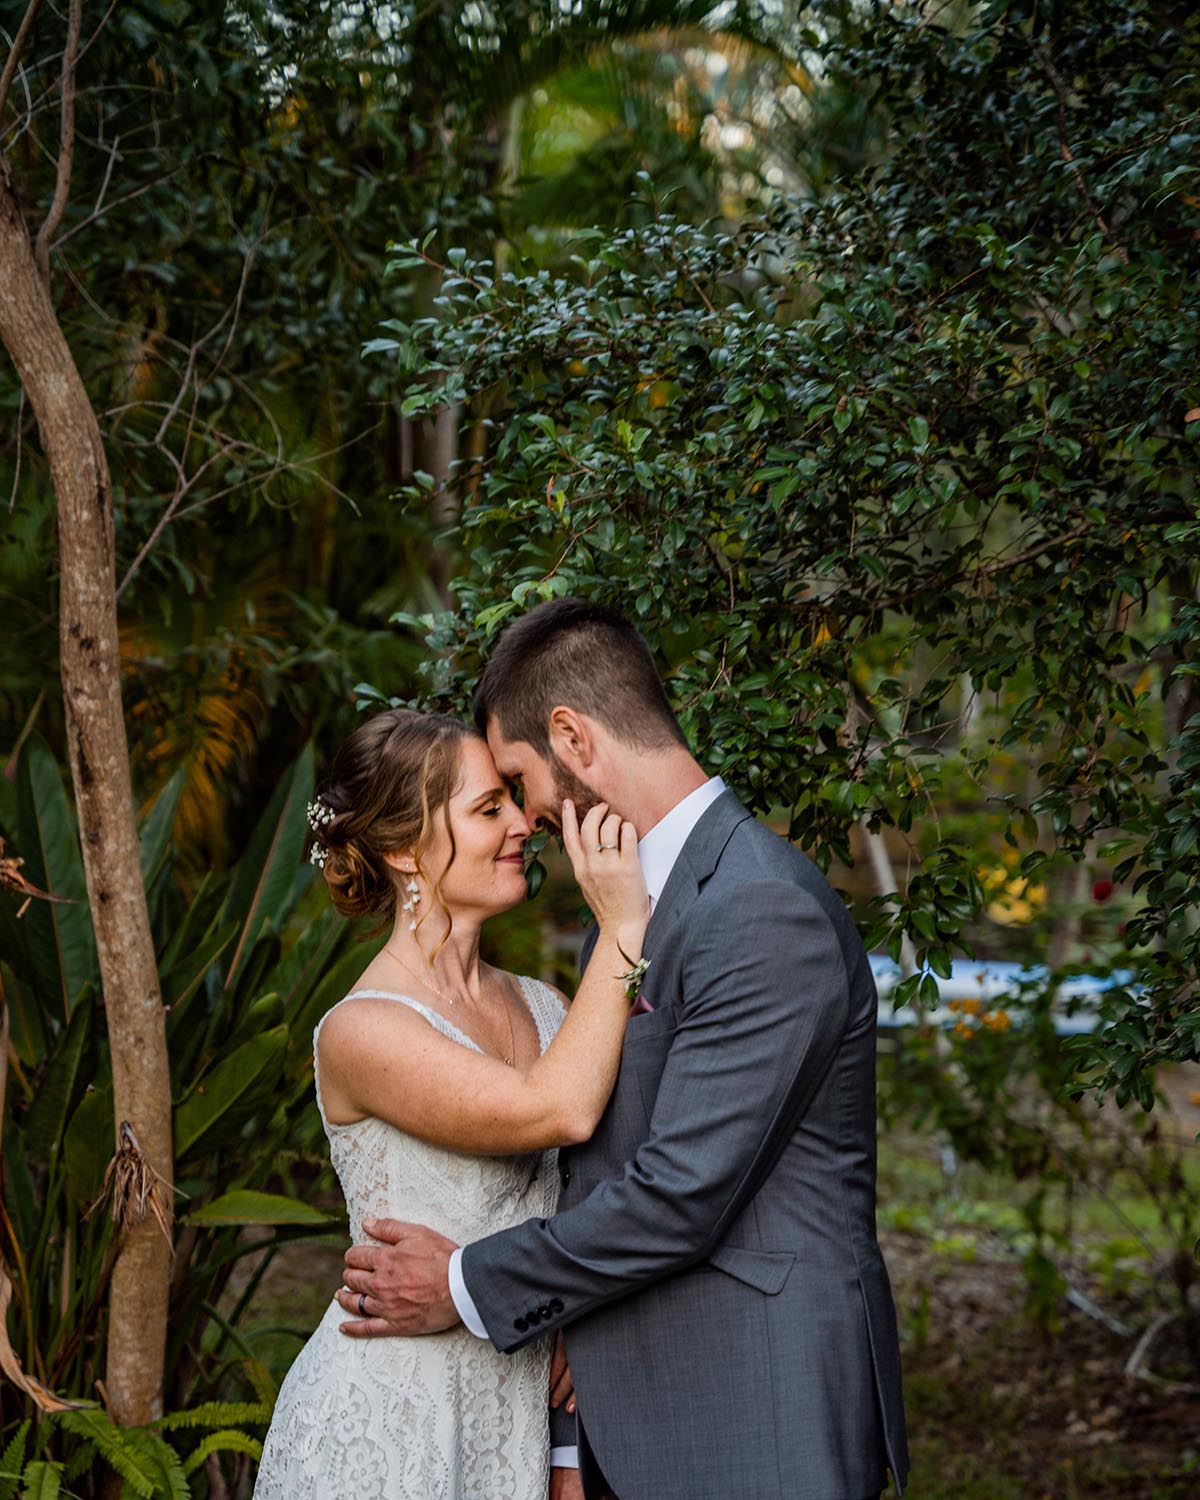 Wedding Photography - Close embrace